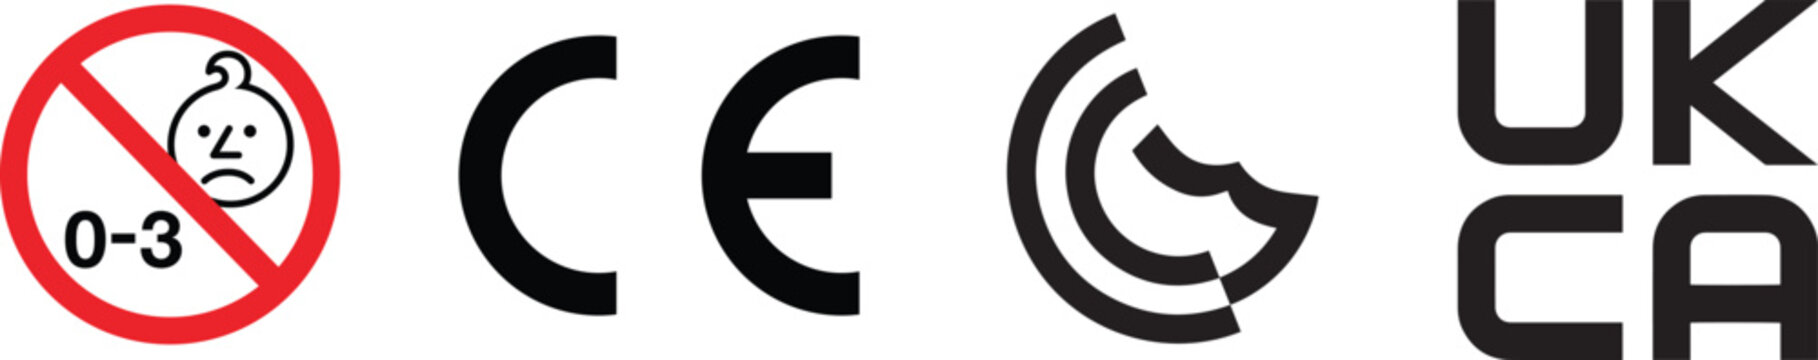 UKNI, UKCA, GCC marking or UKCA Mark Certification and Industrial certificate standard safety logo CE